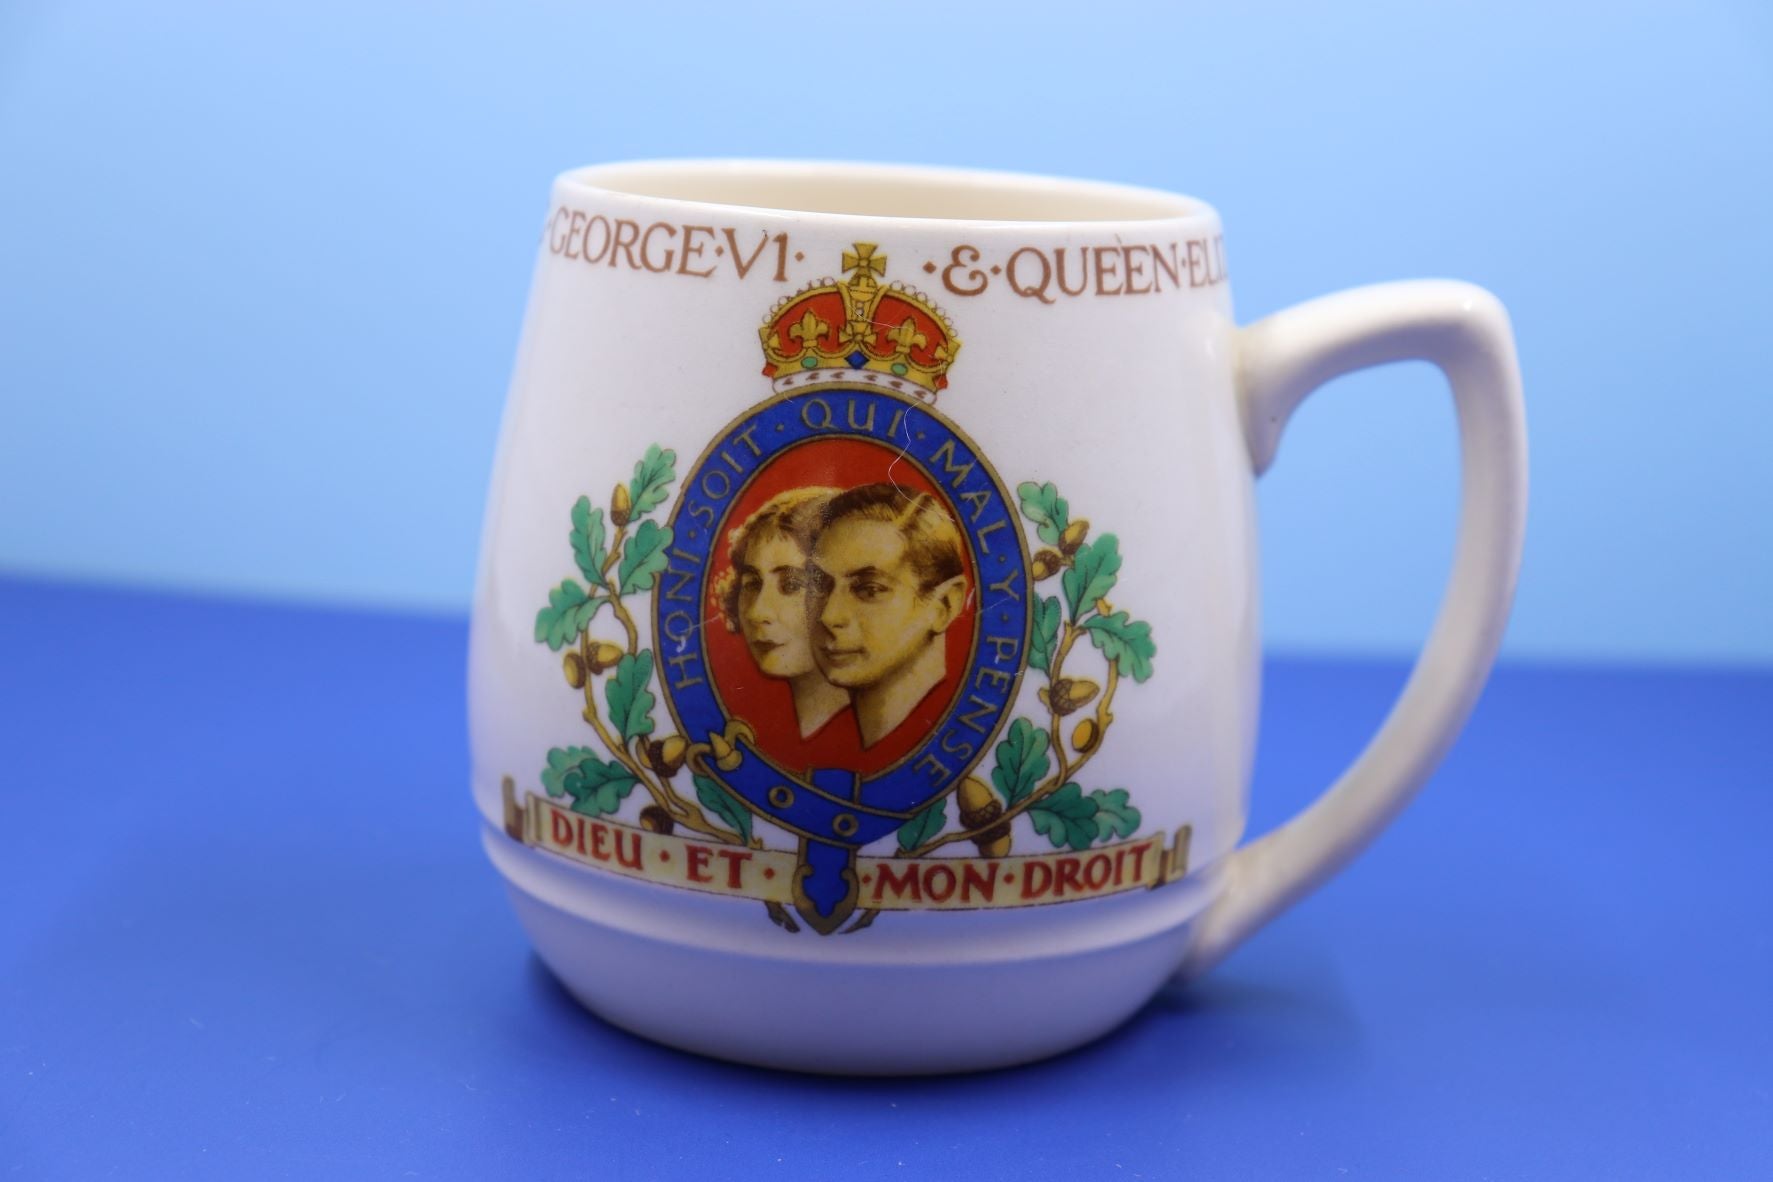 King George VI and Queen Elizabeth Coronation Mug